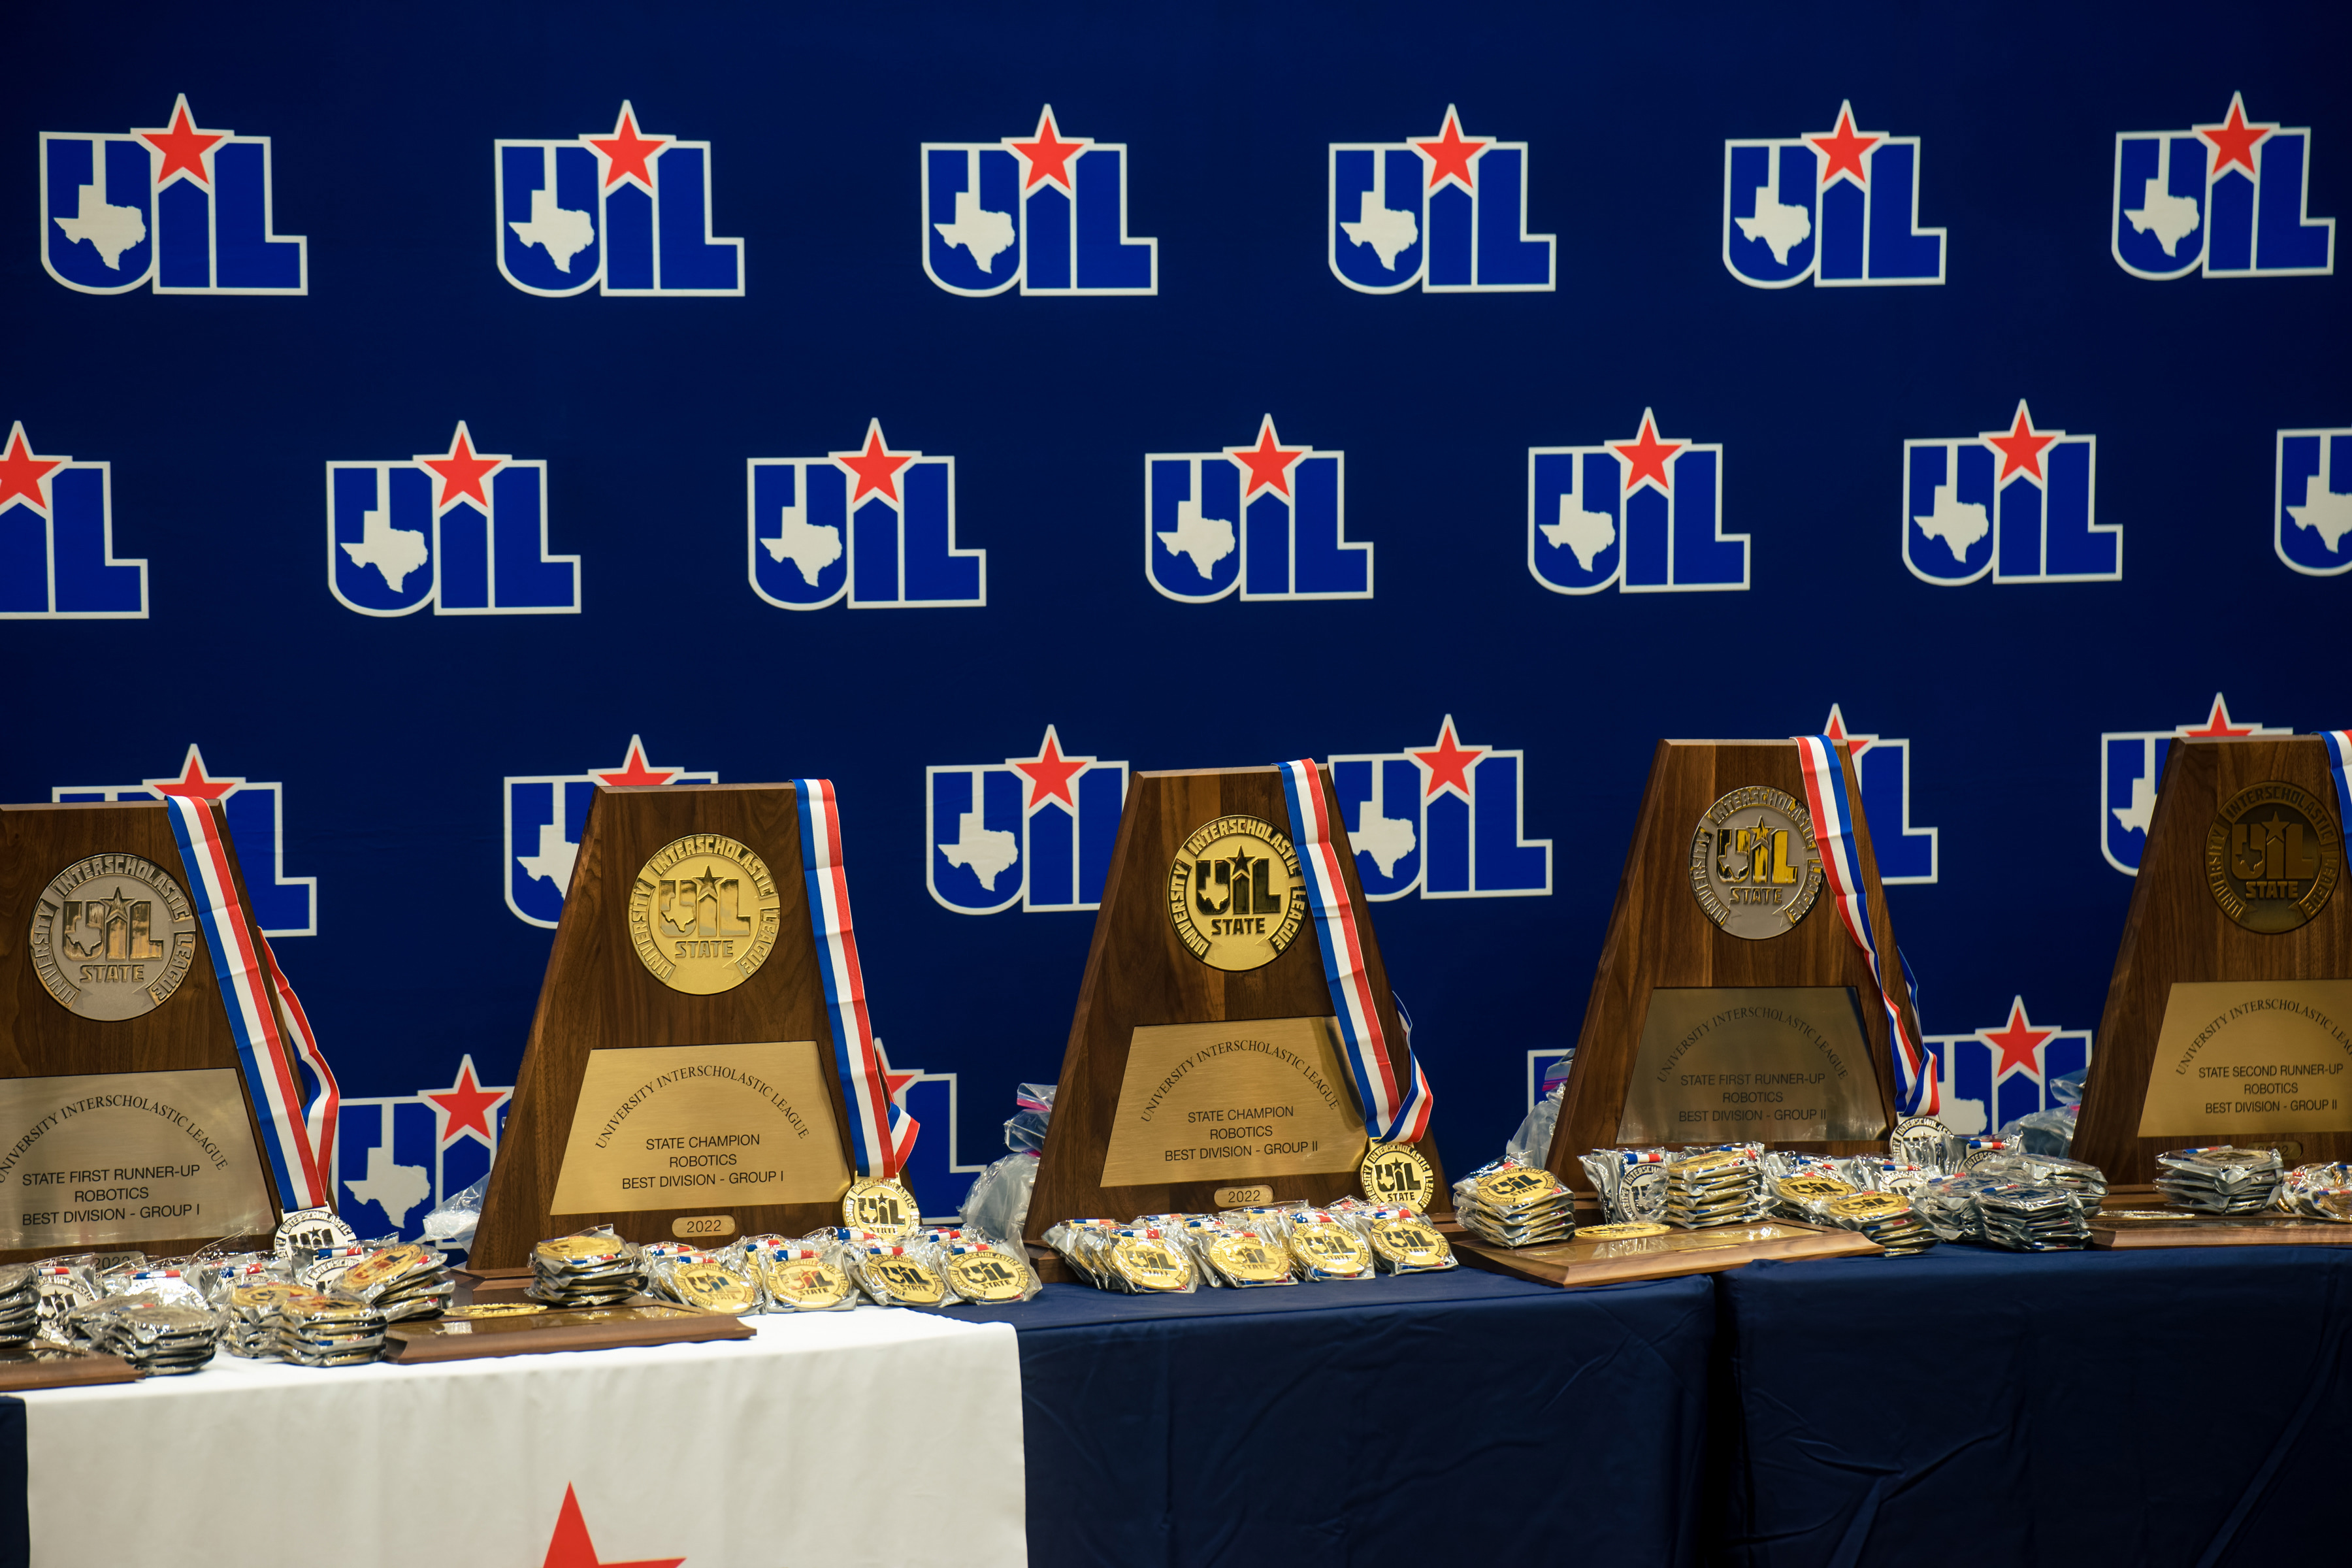 Fair Park will host BEST of Texas UIL Robotics Championship - Image